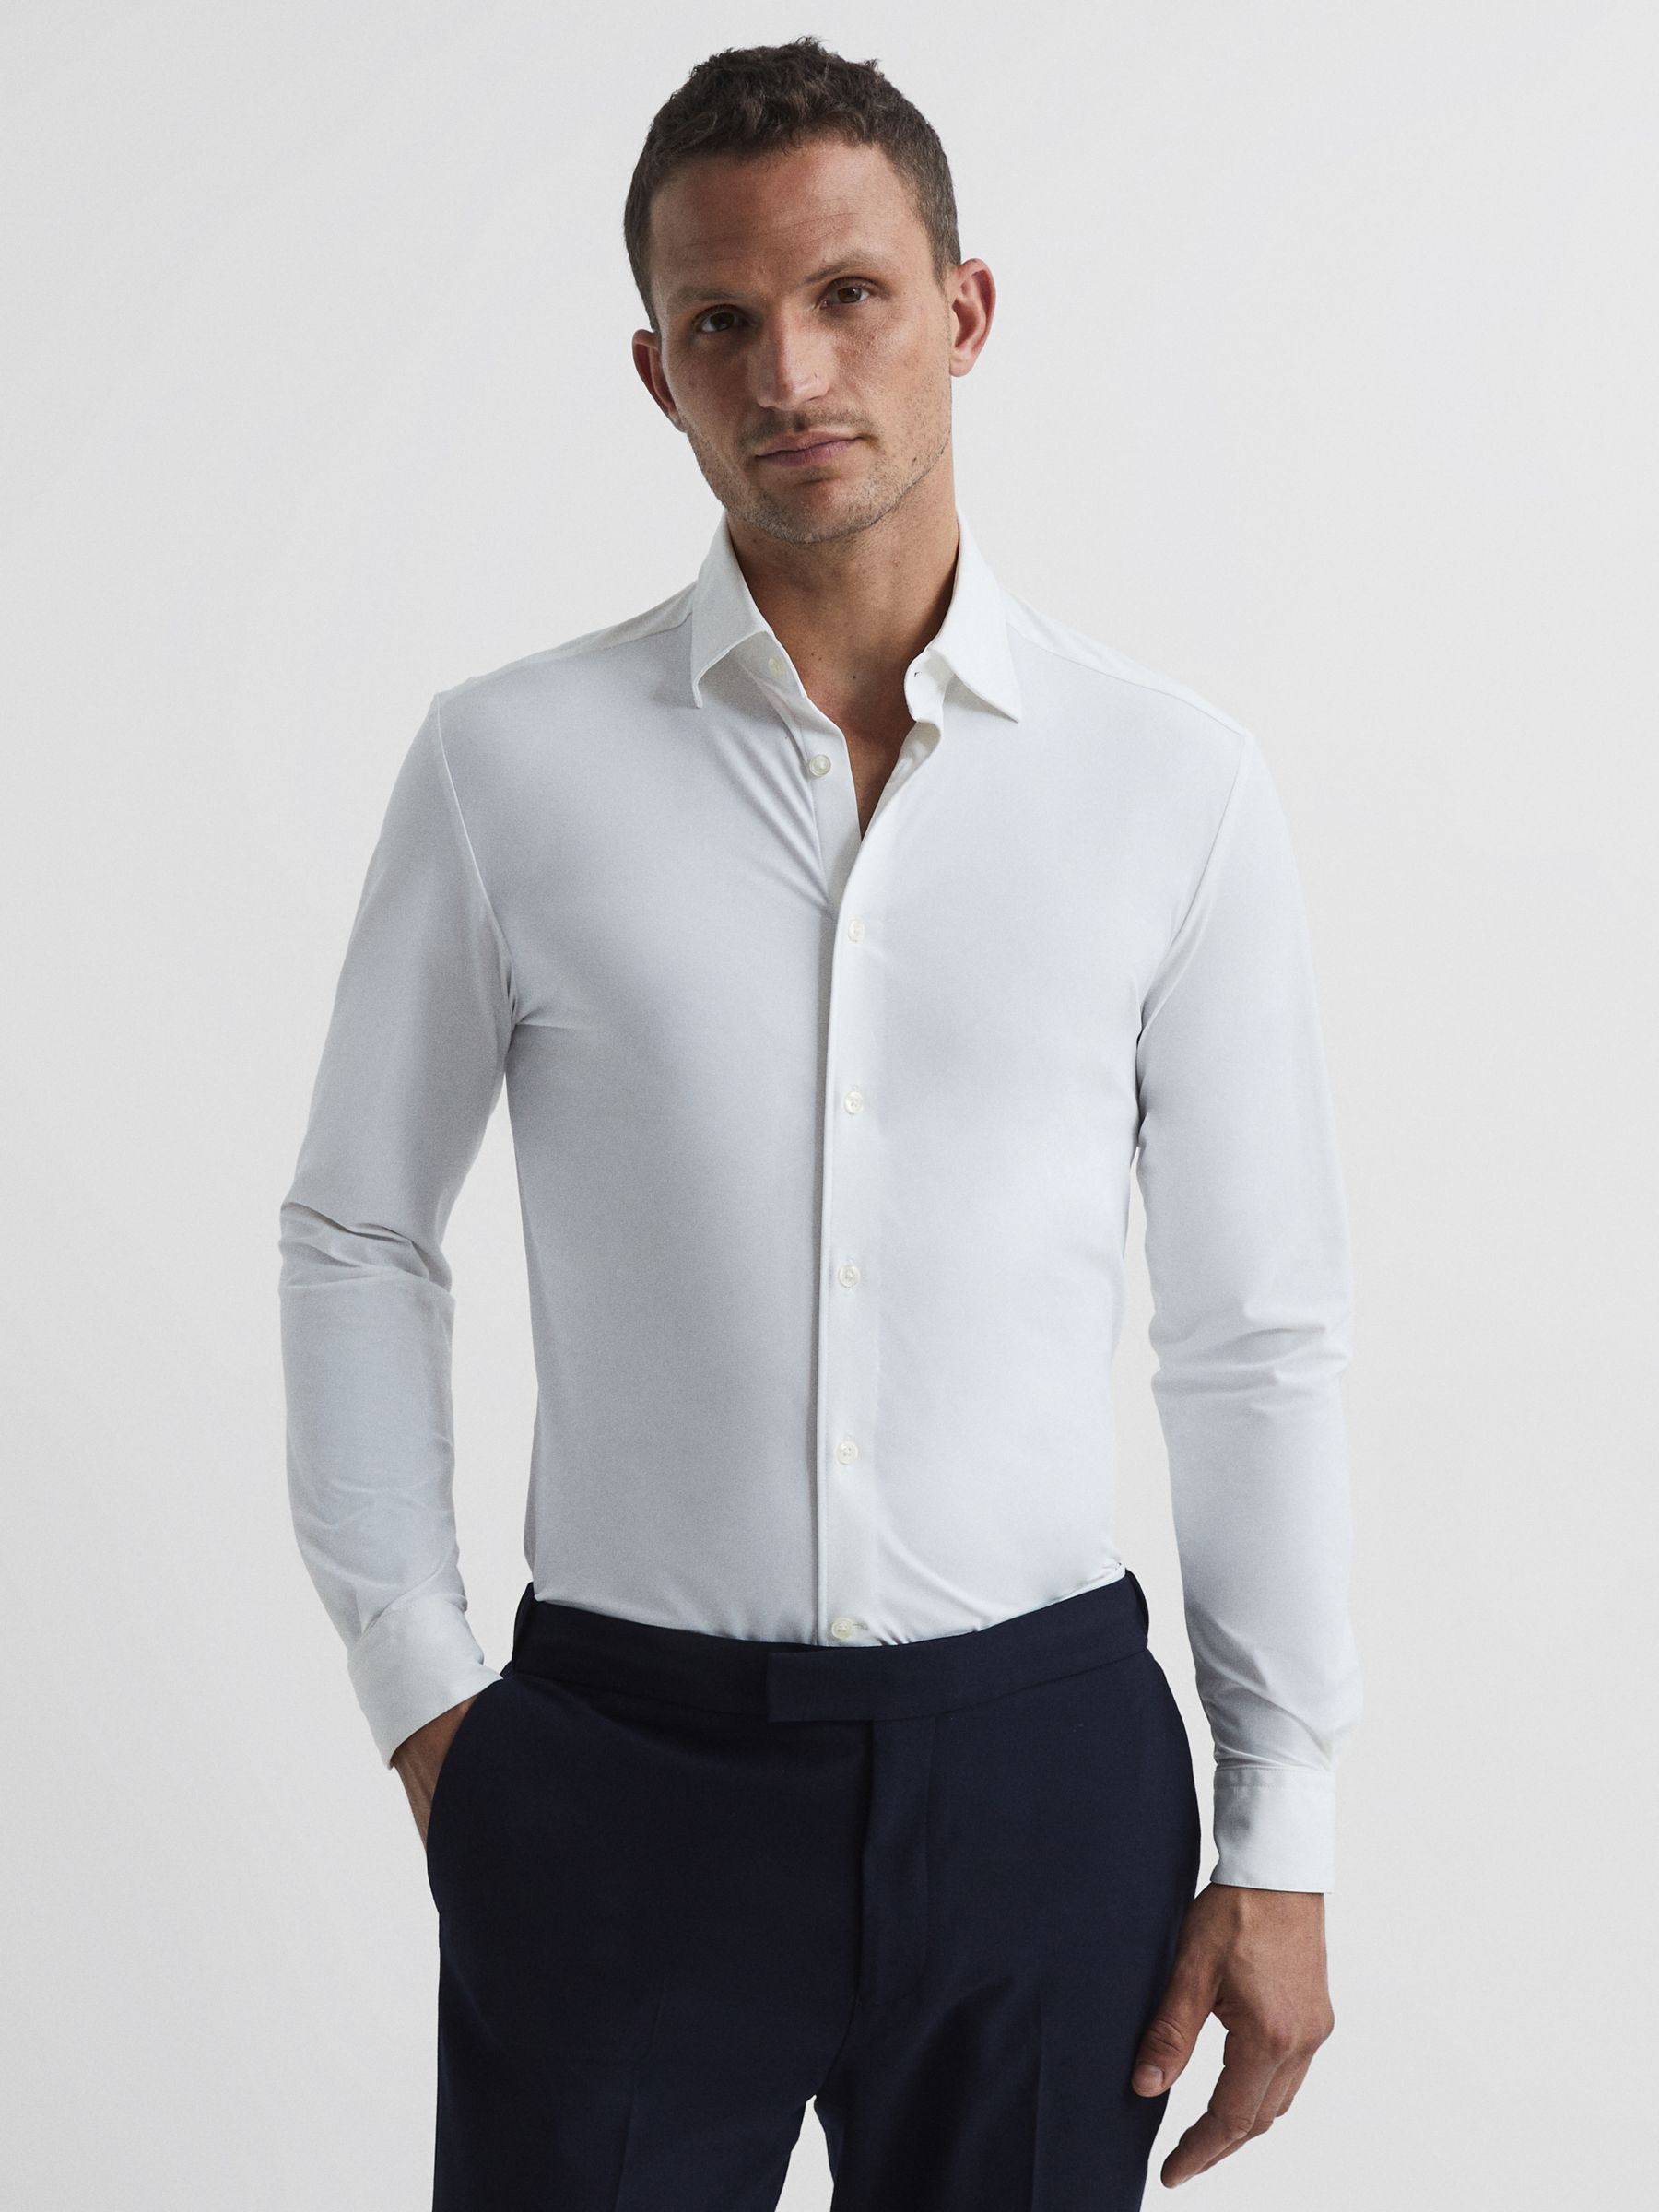 Reiss Voyager Slim Fit Travel Shirt, White, XS